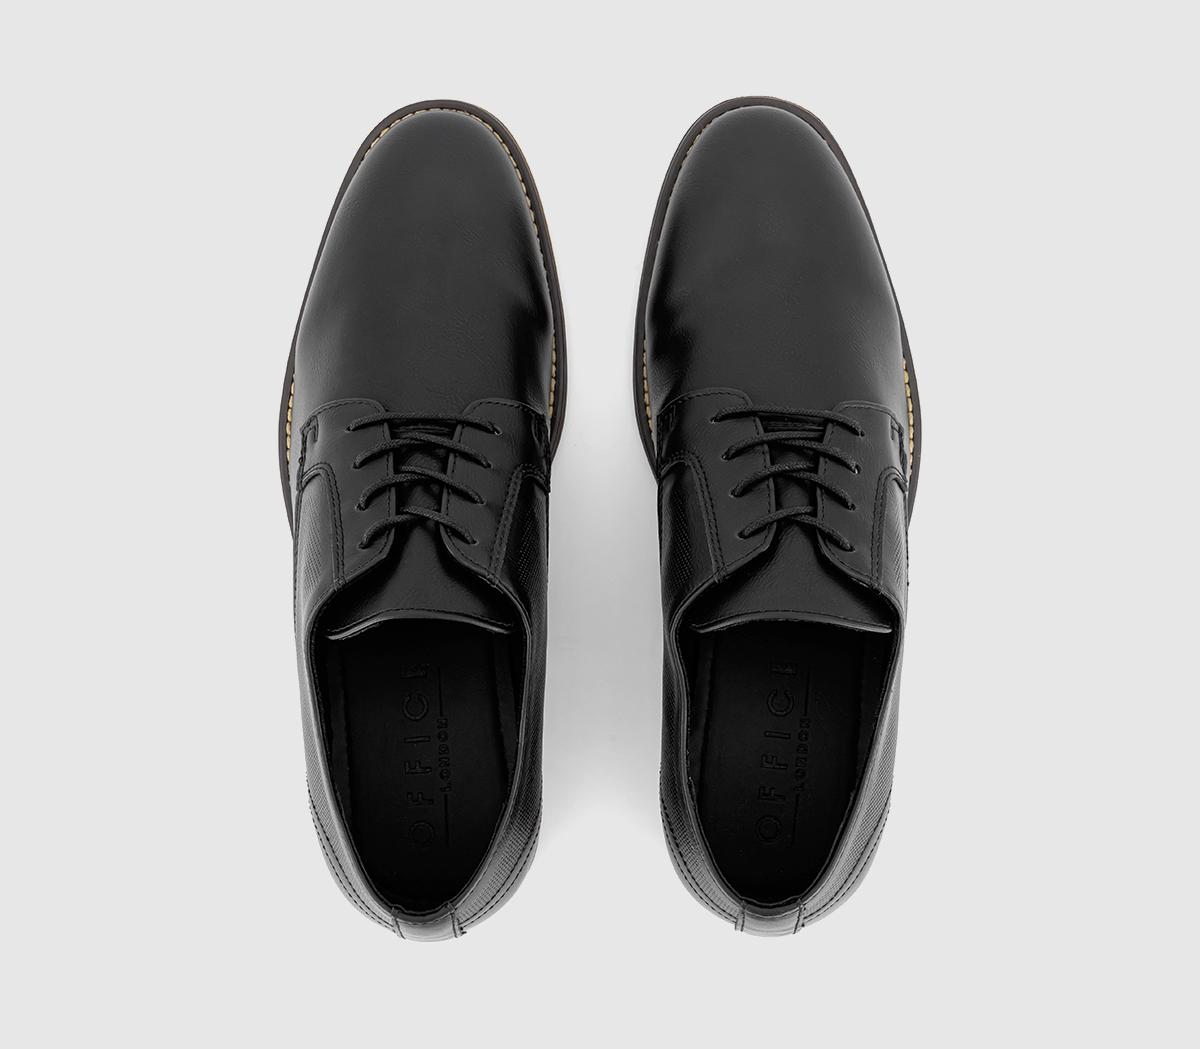 OFFICE Claydon Smart Derby Shoes Black - Men's Casual Shoes